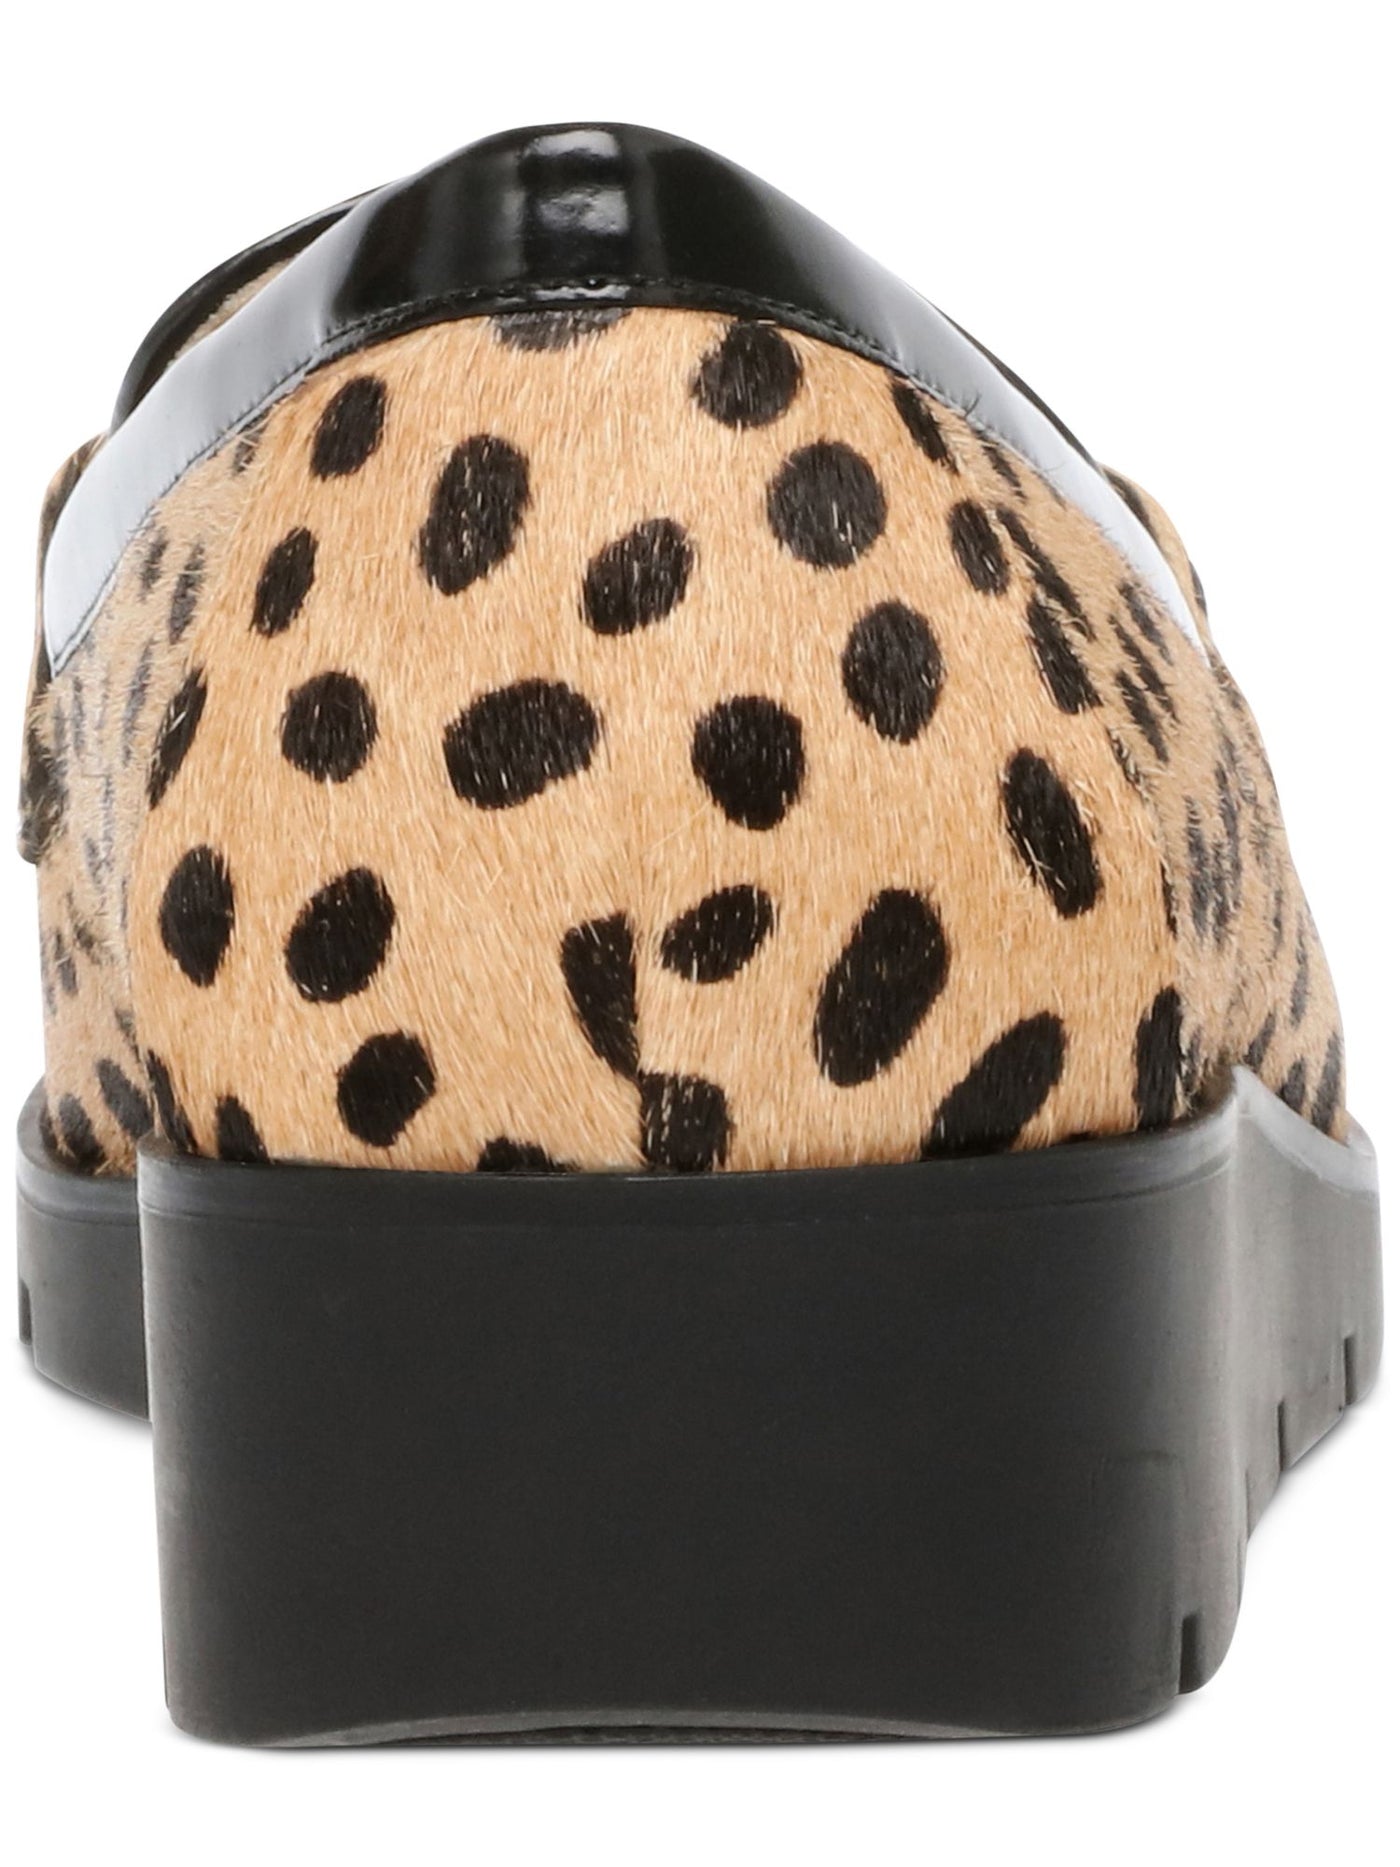 ANNE KLEIN Womens Beige Leopard Print 0.5" Platform Comfort Lalita Almond Toe Wedge Slip On Loafers Shoes 9.5 M